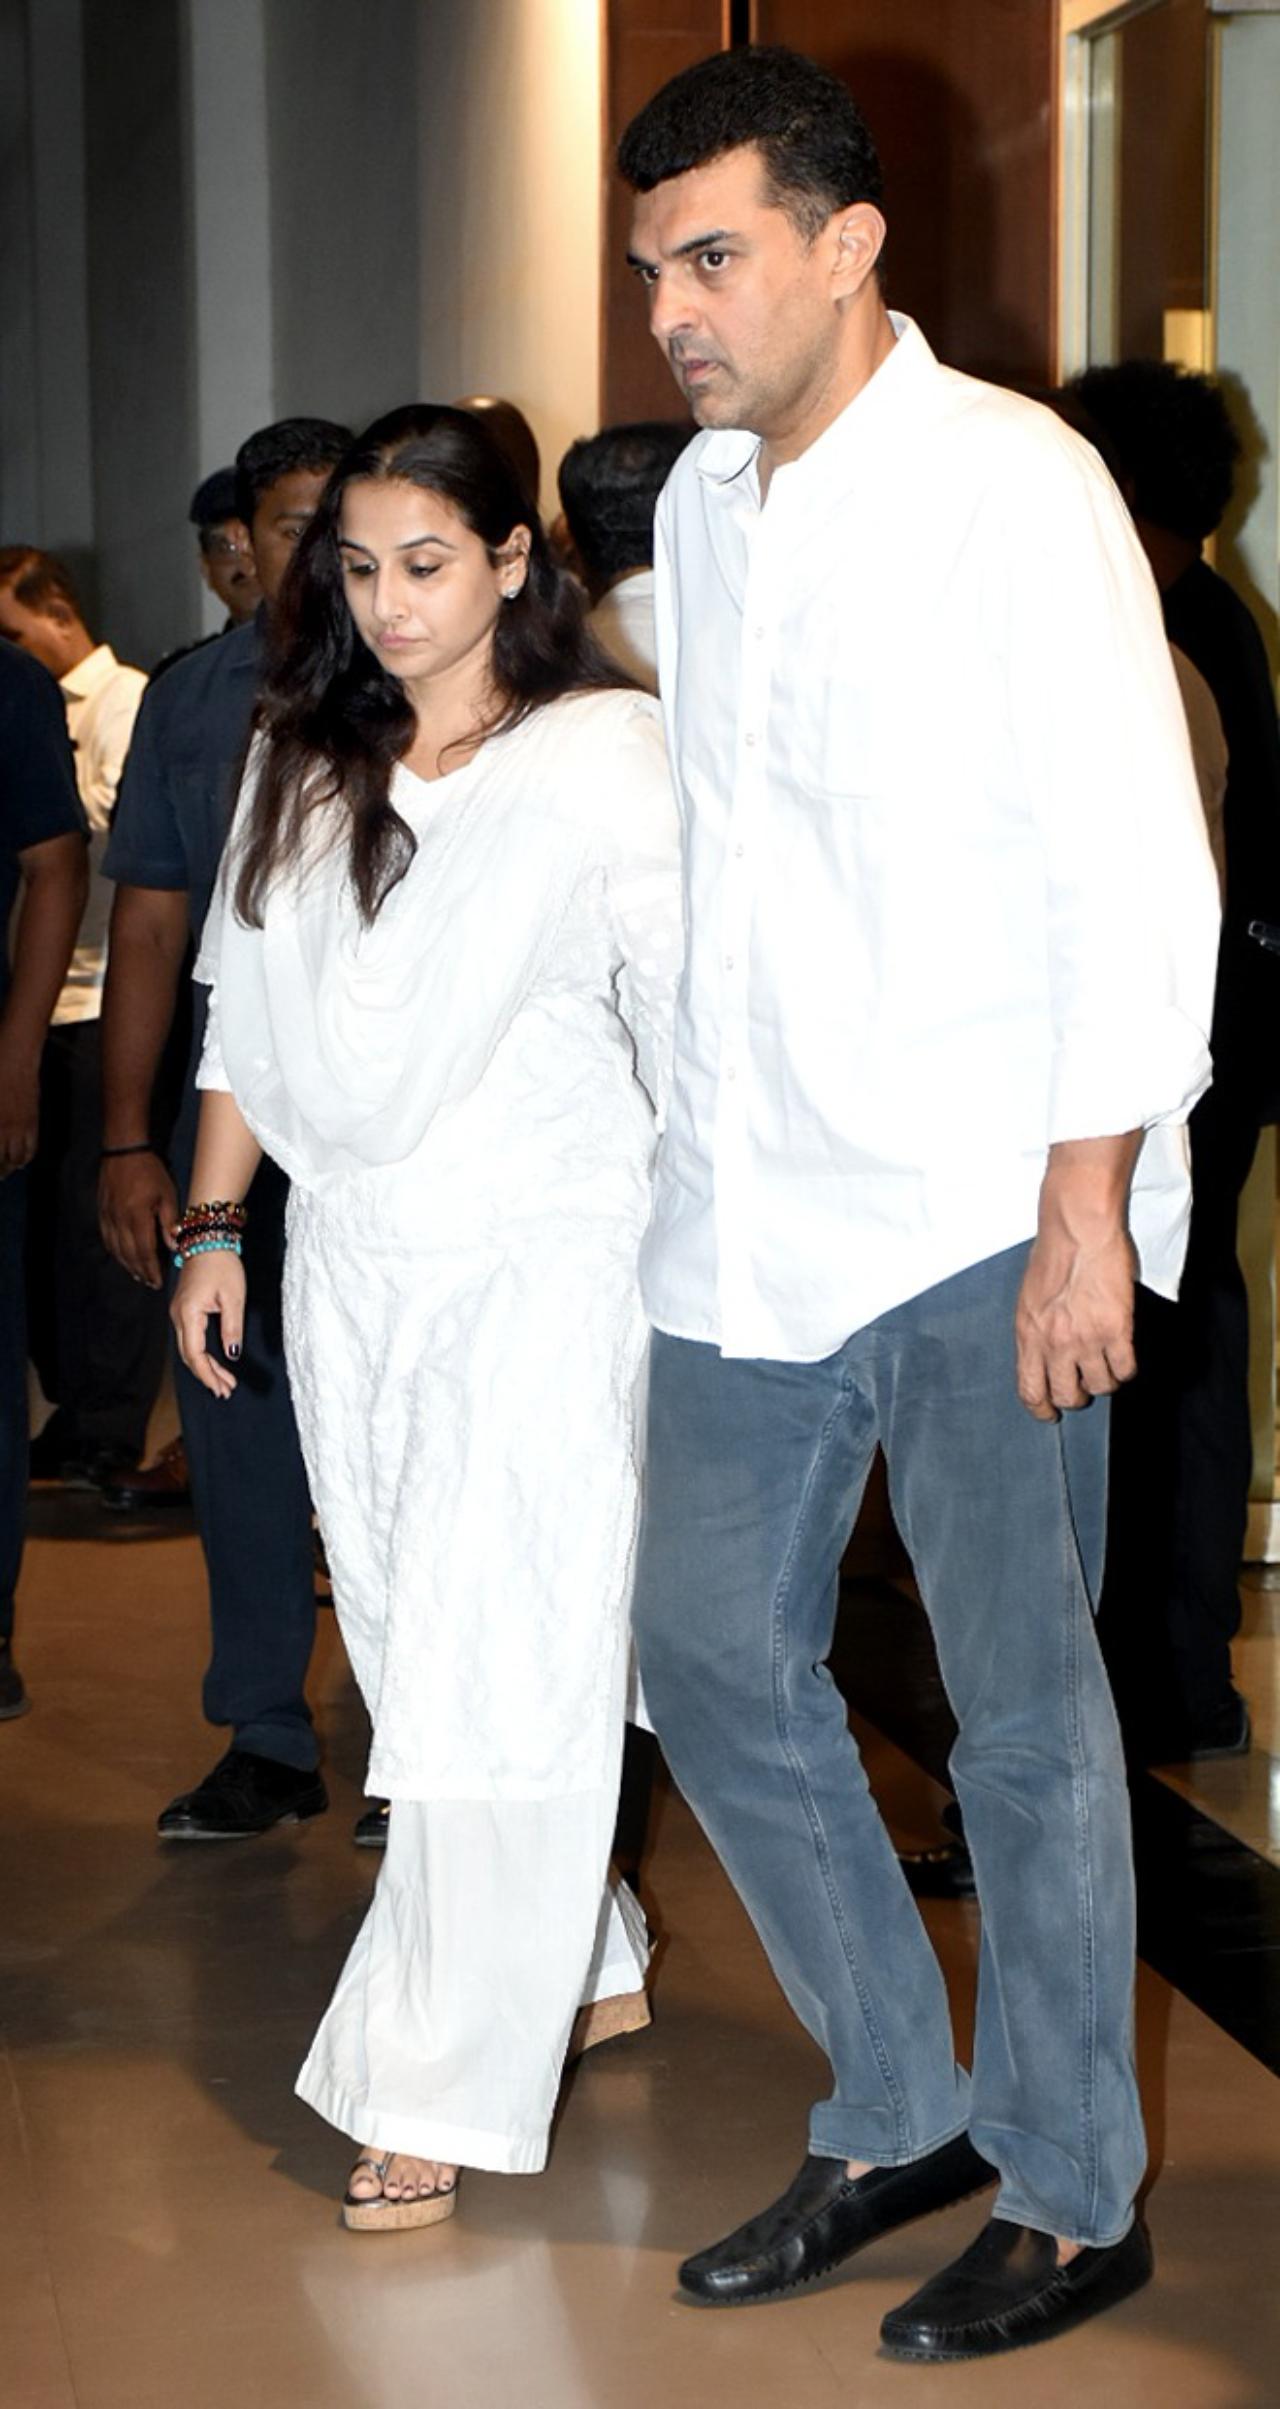 Actress Vidya Balan and her producer husband Siddharth Roy Kapur arrived together for the prayer meet